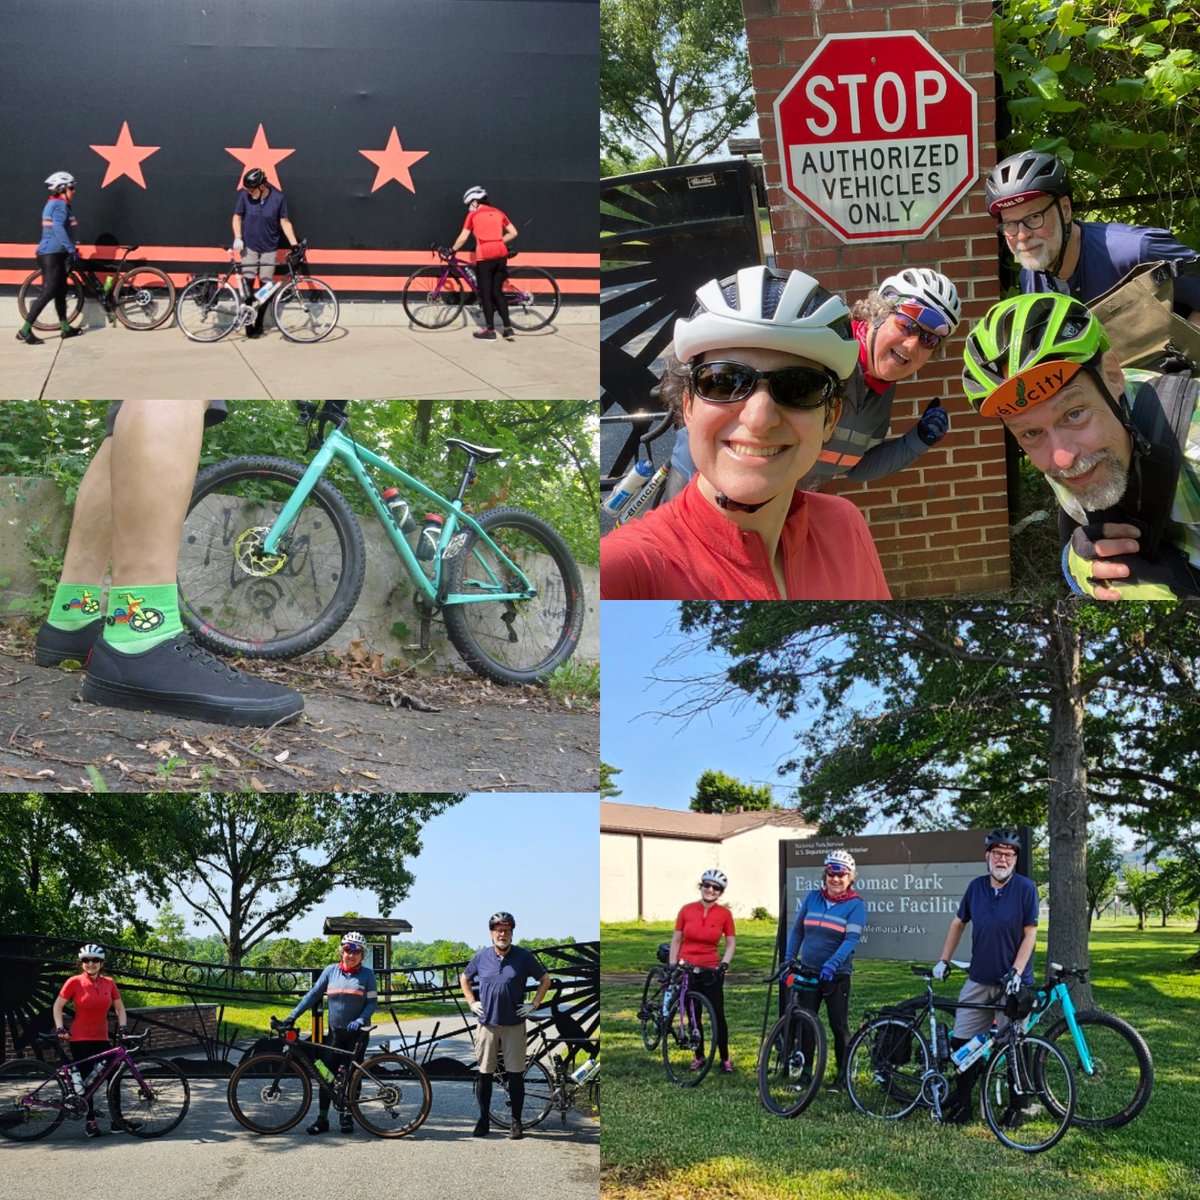 Rode my big bicycle & wore my big wheel socks today & led #urbanadventureride from East Potomac Park up to Lake Artemesia & back! 
#bikedc #bikemd #bicycleride